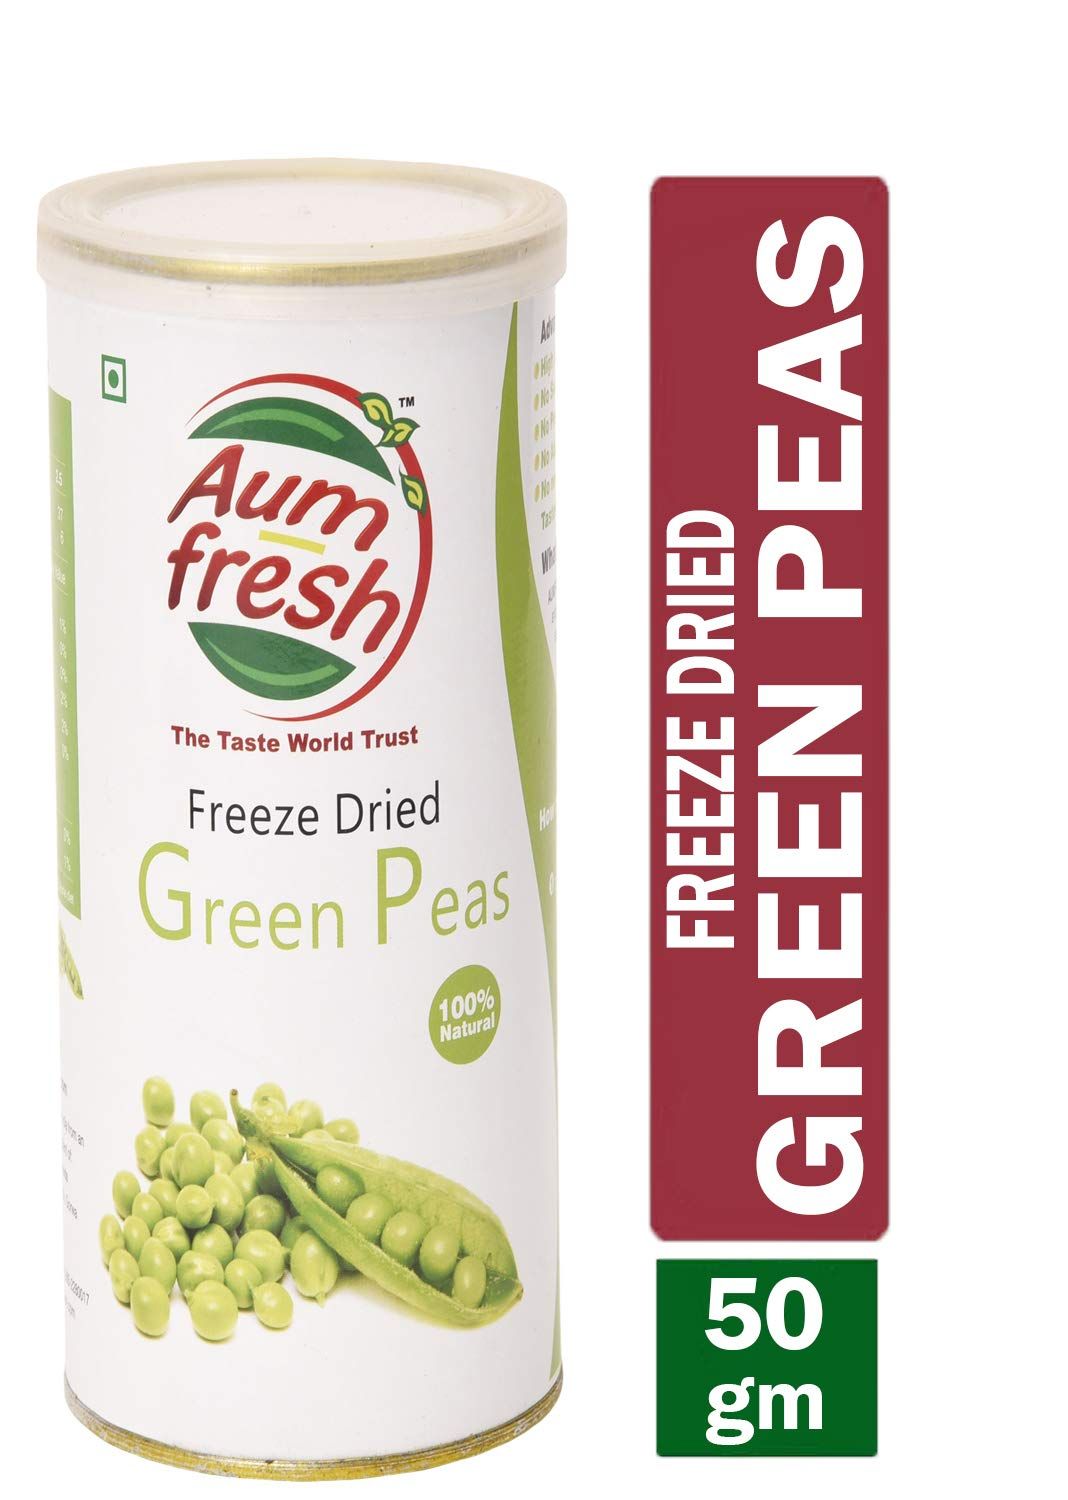 Aum Fresh Freeze Dried Green Peas Image